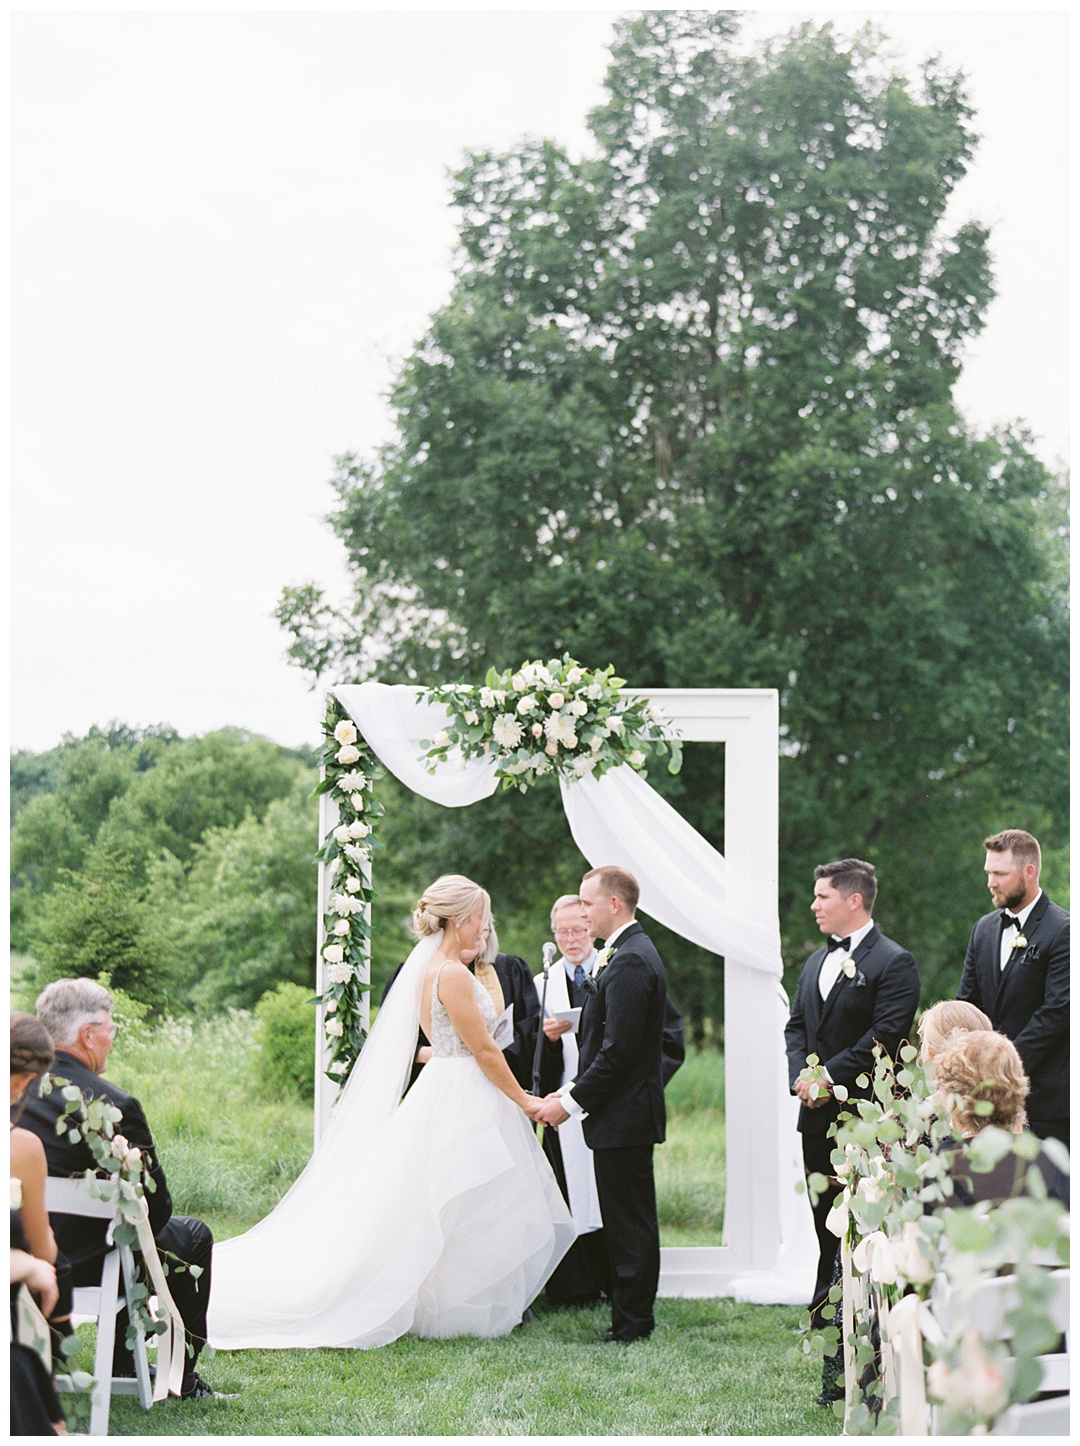 Wedding Ceremony Lush Backyard Wedding on Film Featured on Magnolia Rouge with Sarah Sunstrom Photography